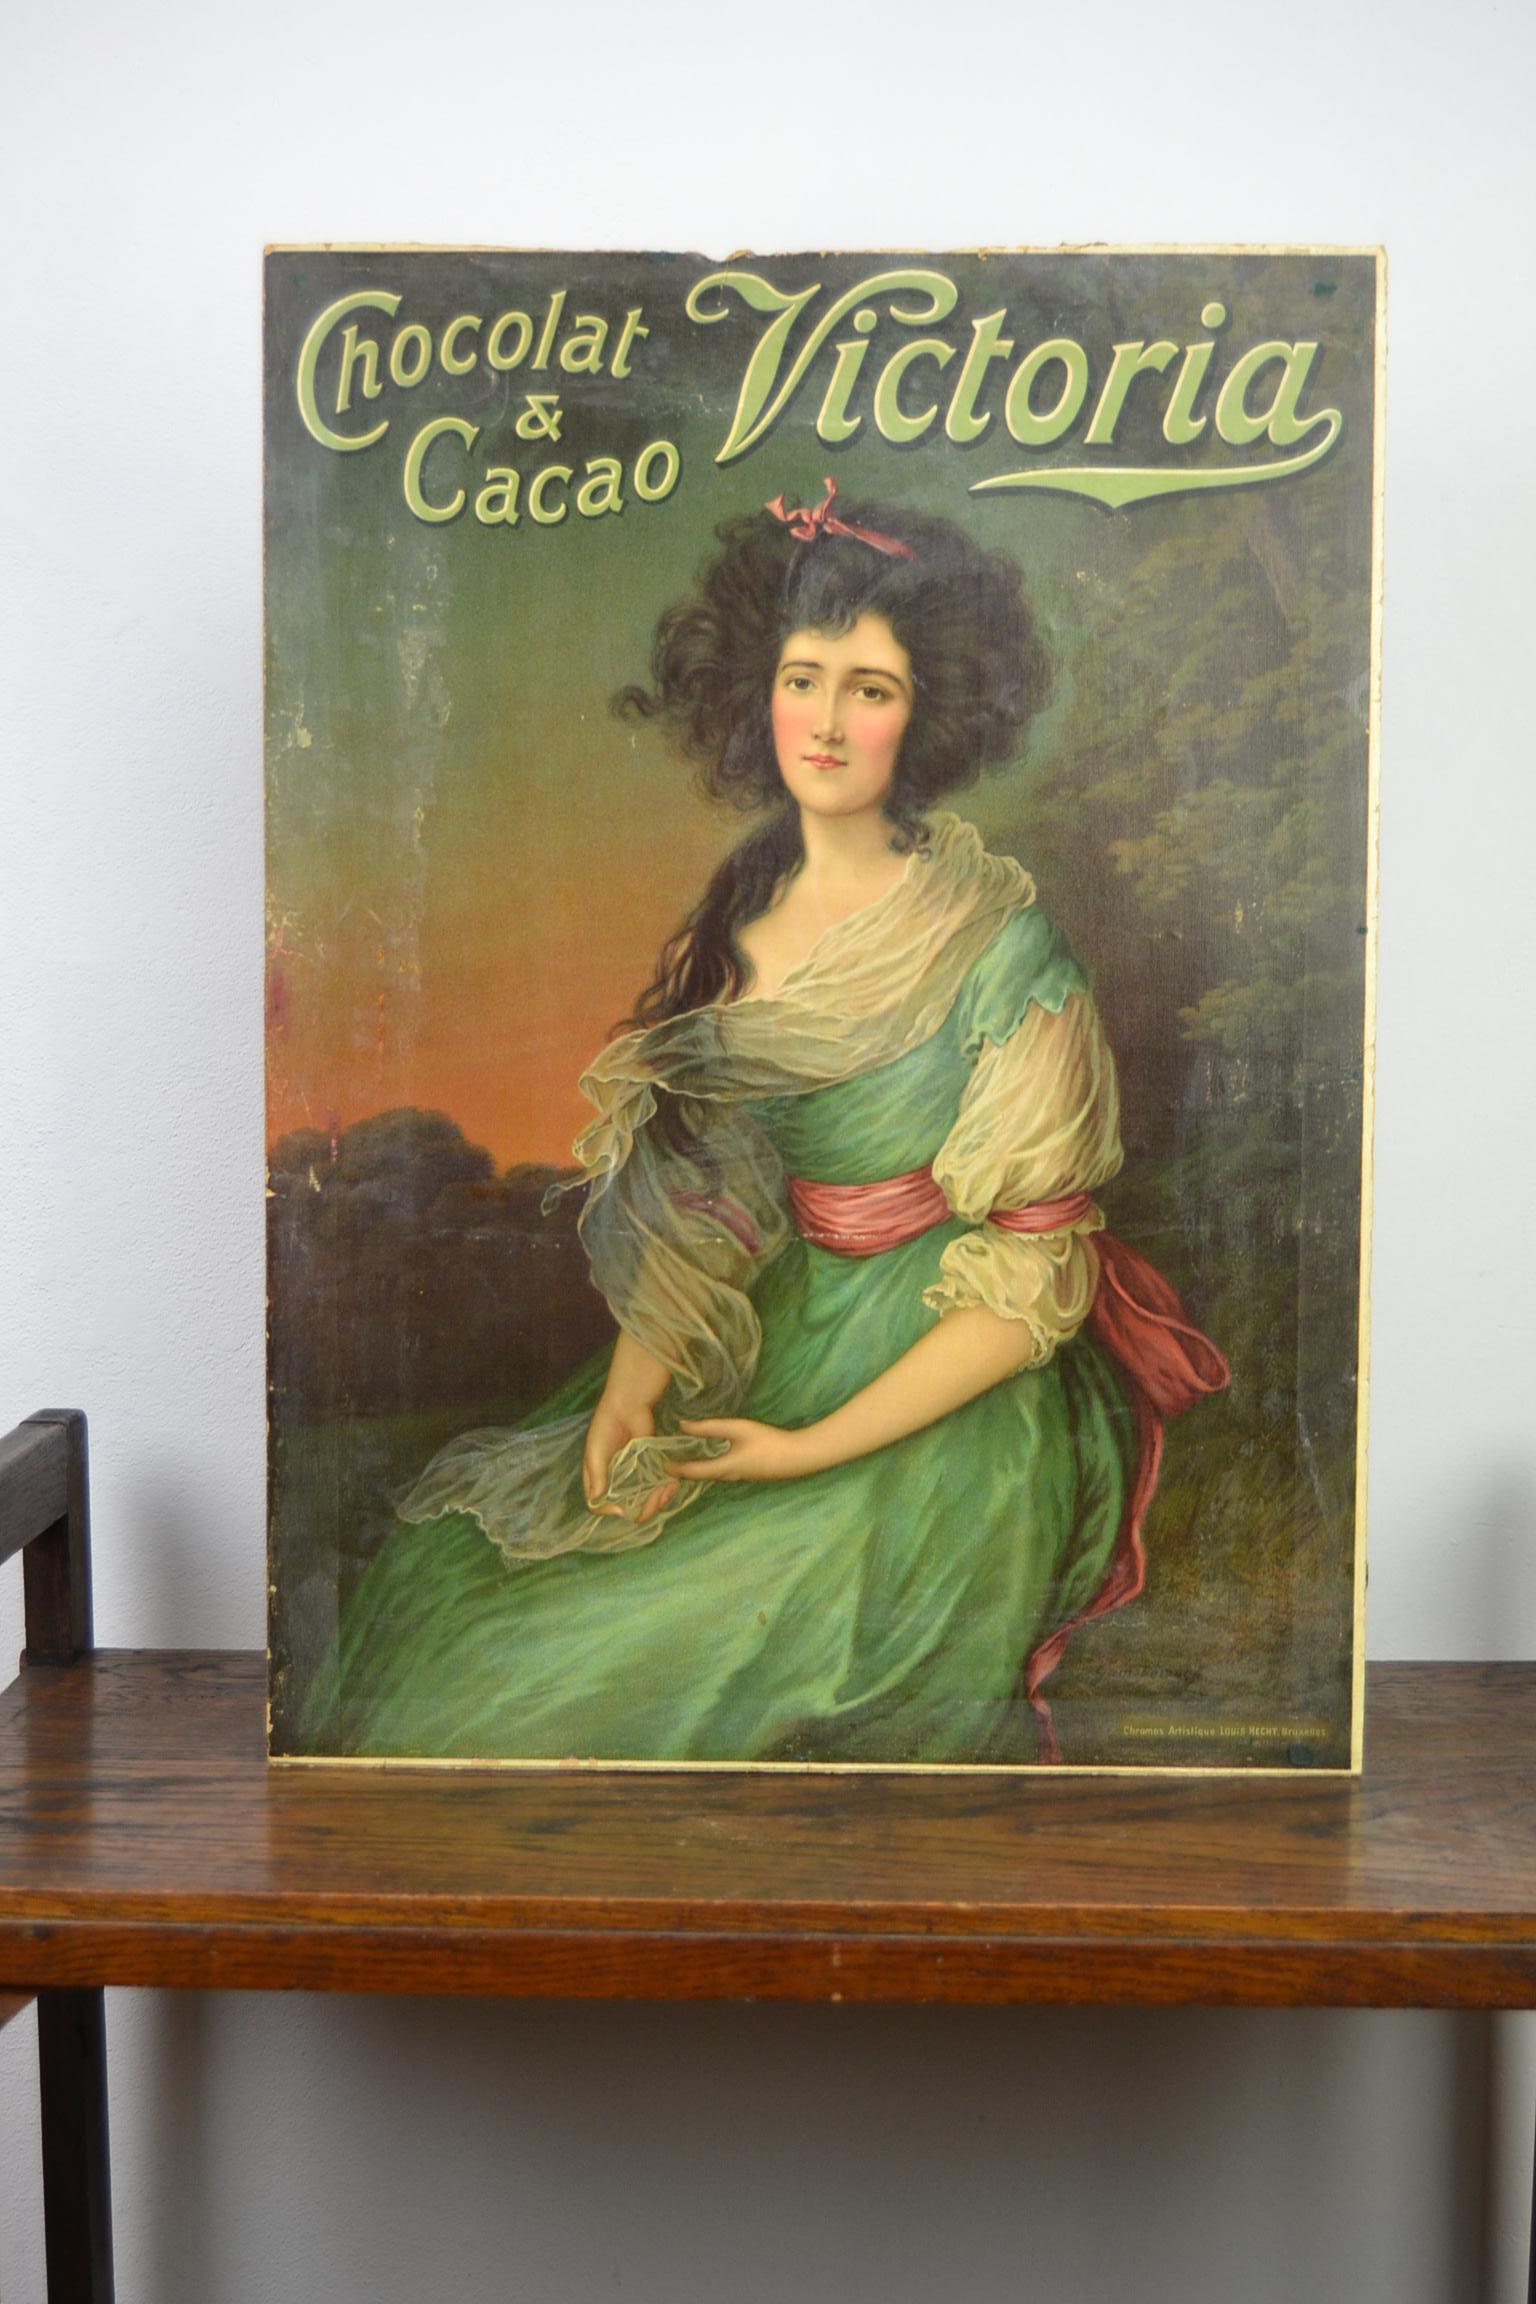 Antique Chromo Advertising Sign for Victoria Chocolate and Cacao, Belgium 2